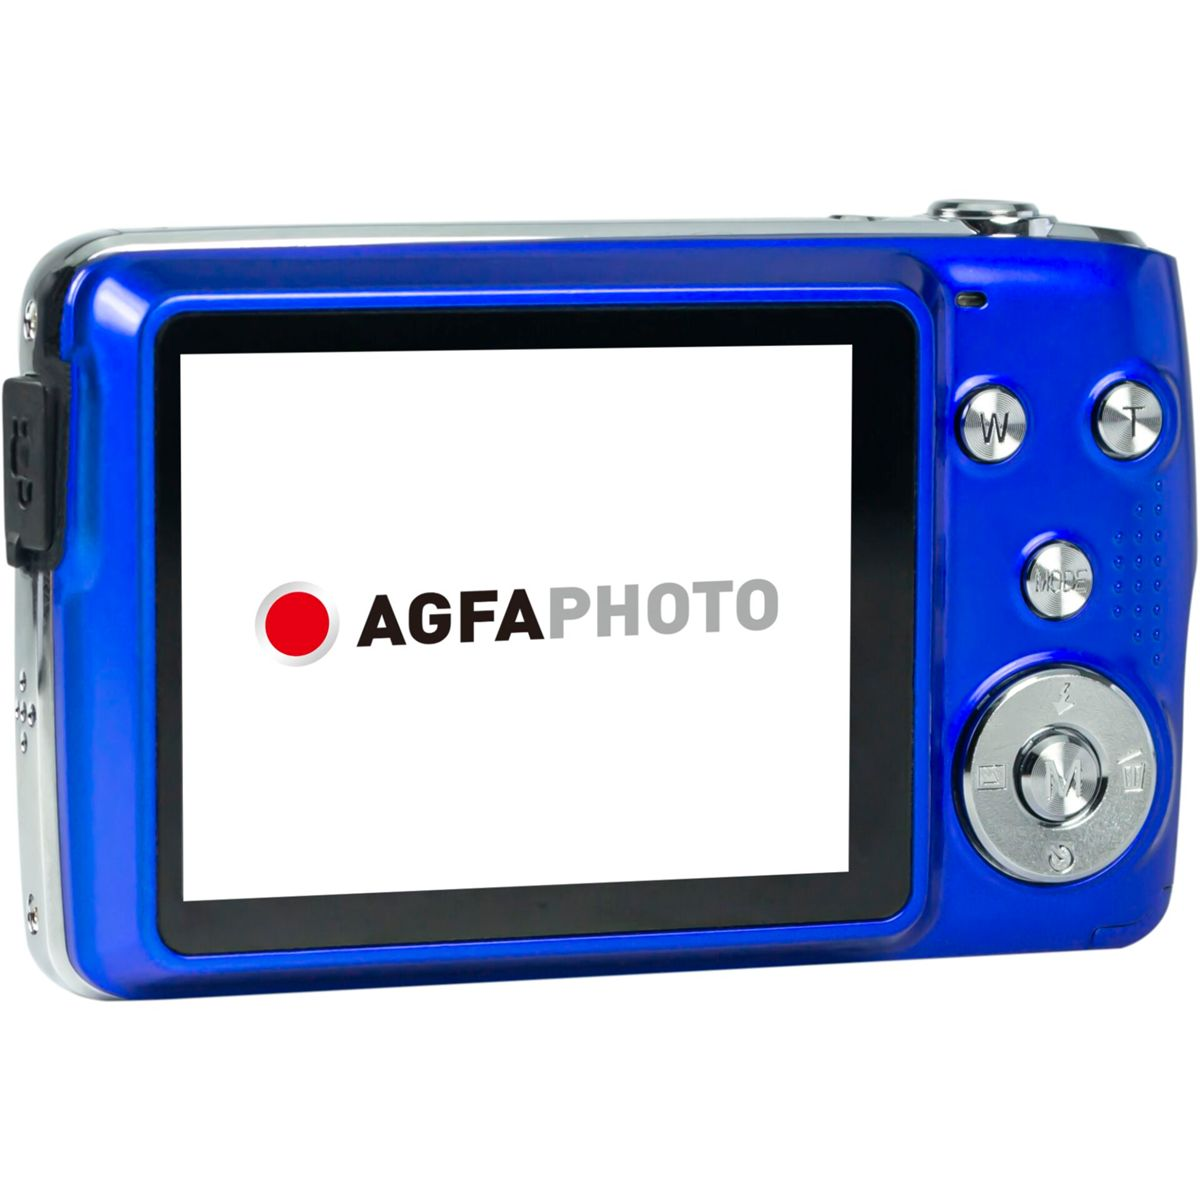 AGFAPHOTO Digitalkamera mit 8 x blau, TFT- LCD blau LCD-Backlight DC8200 Realishot Zoom, opt.